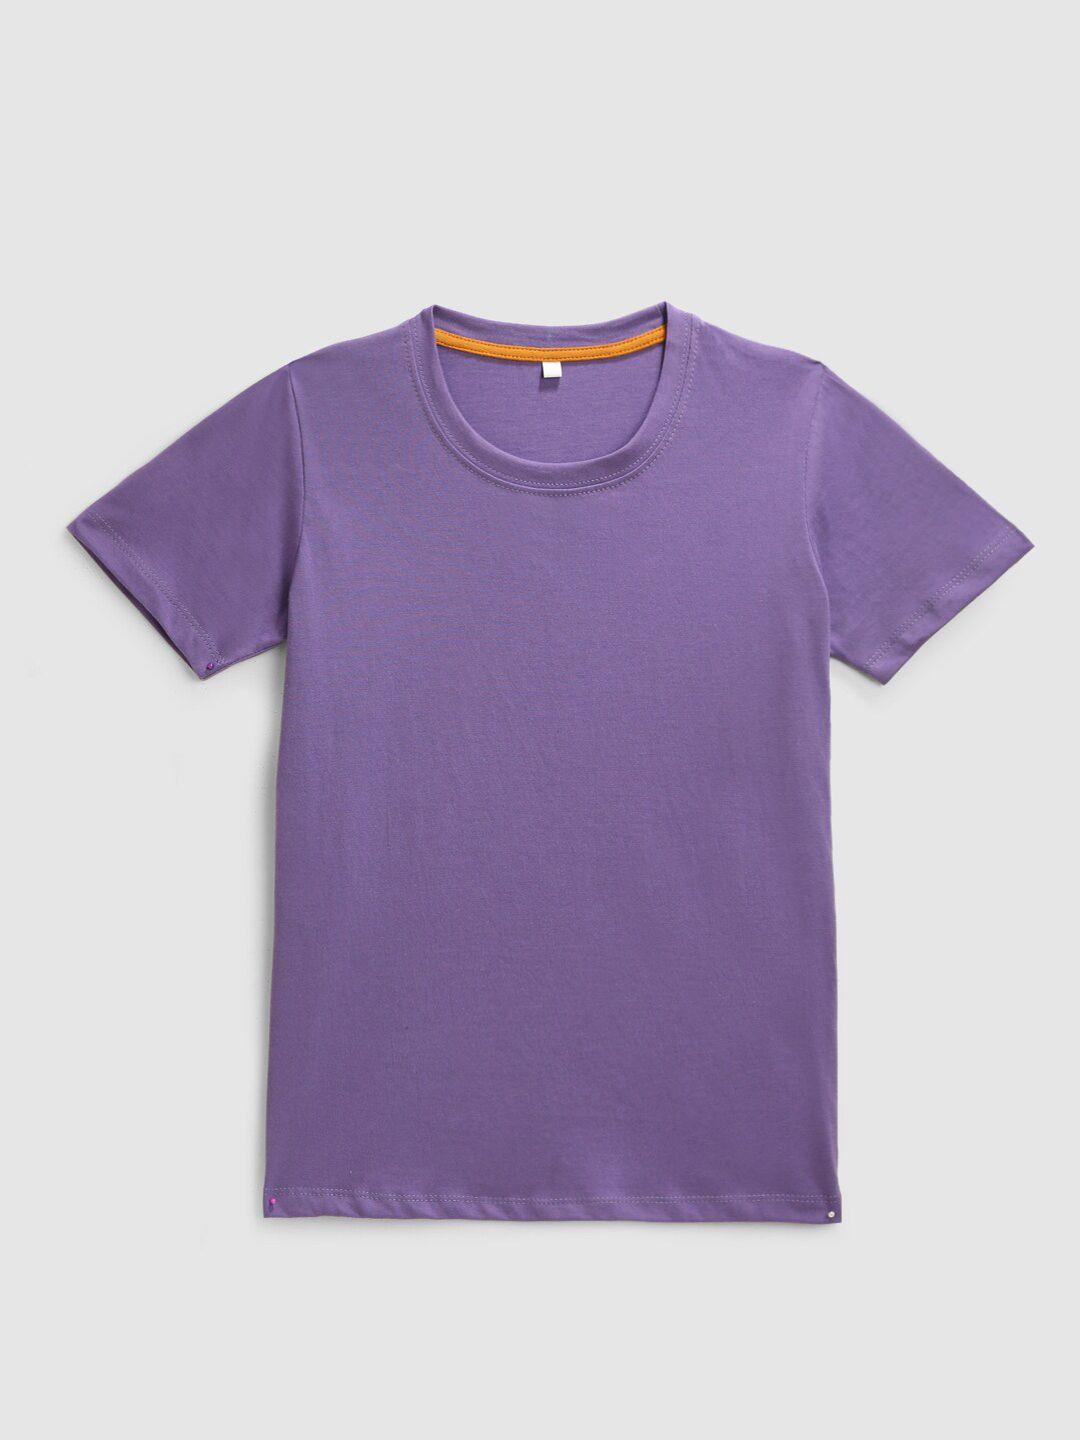 kidscraft boys purple solid cotton t-shirt